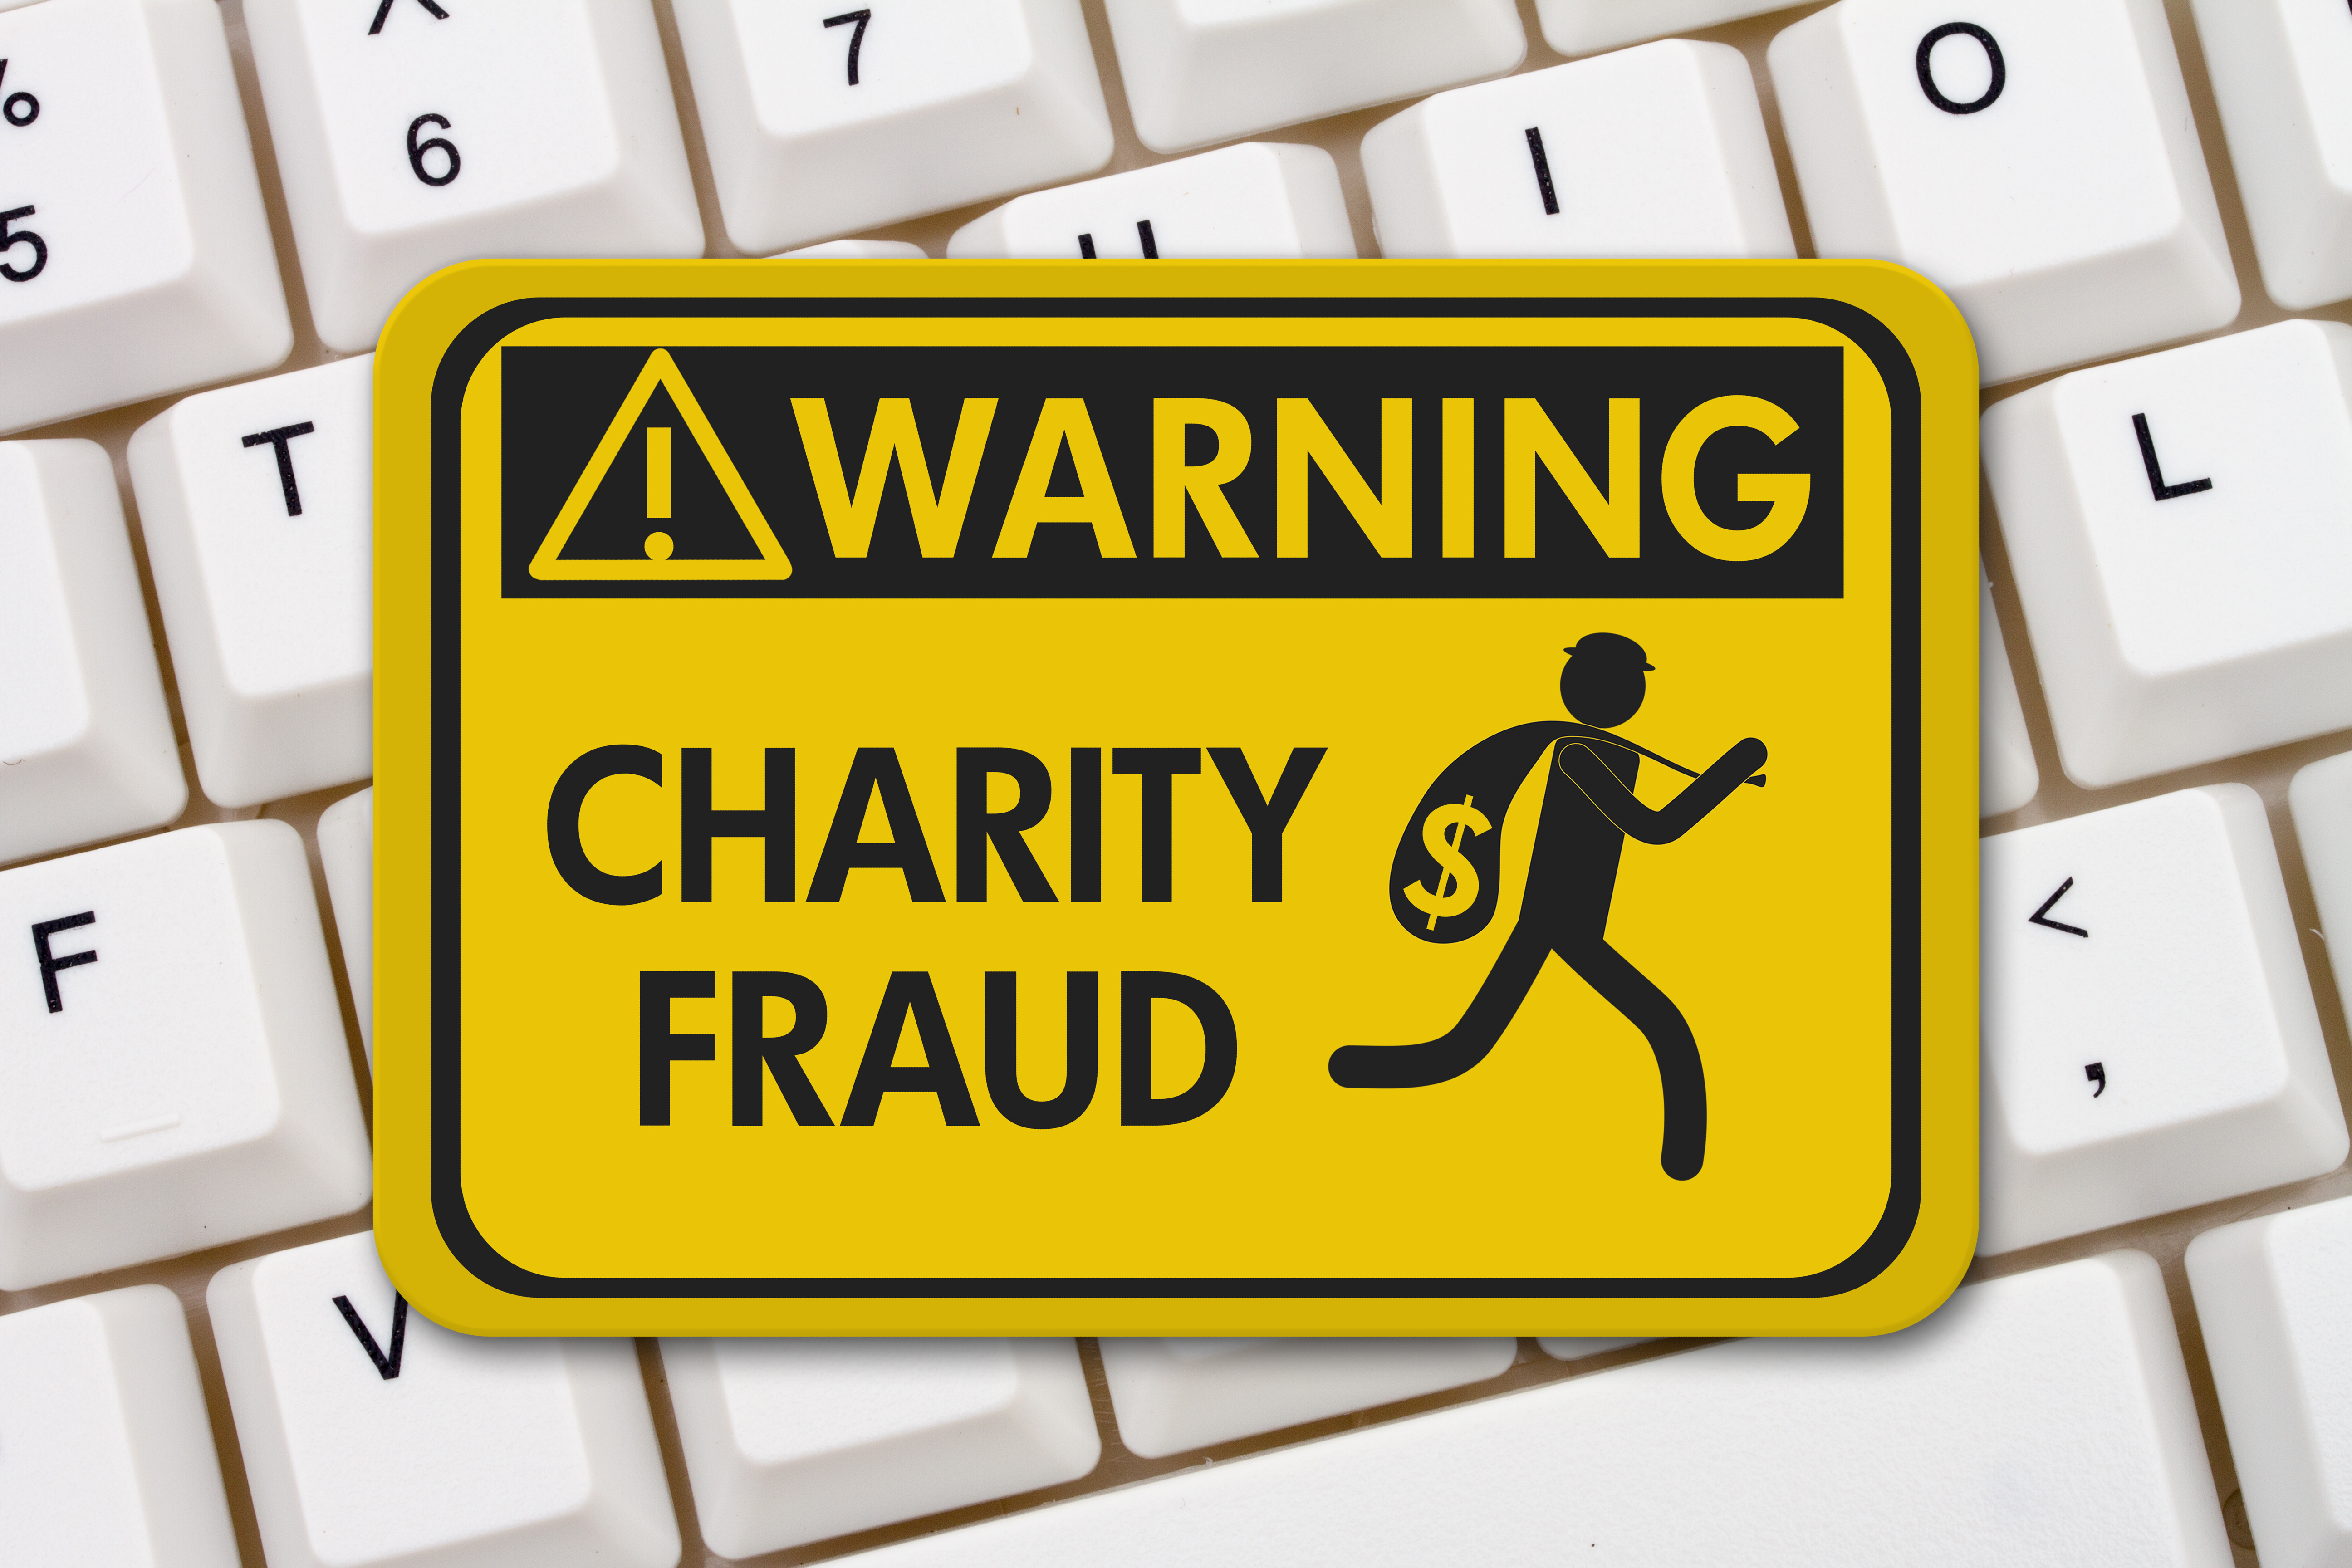 NHS Charity Fraud Information Alert